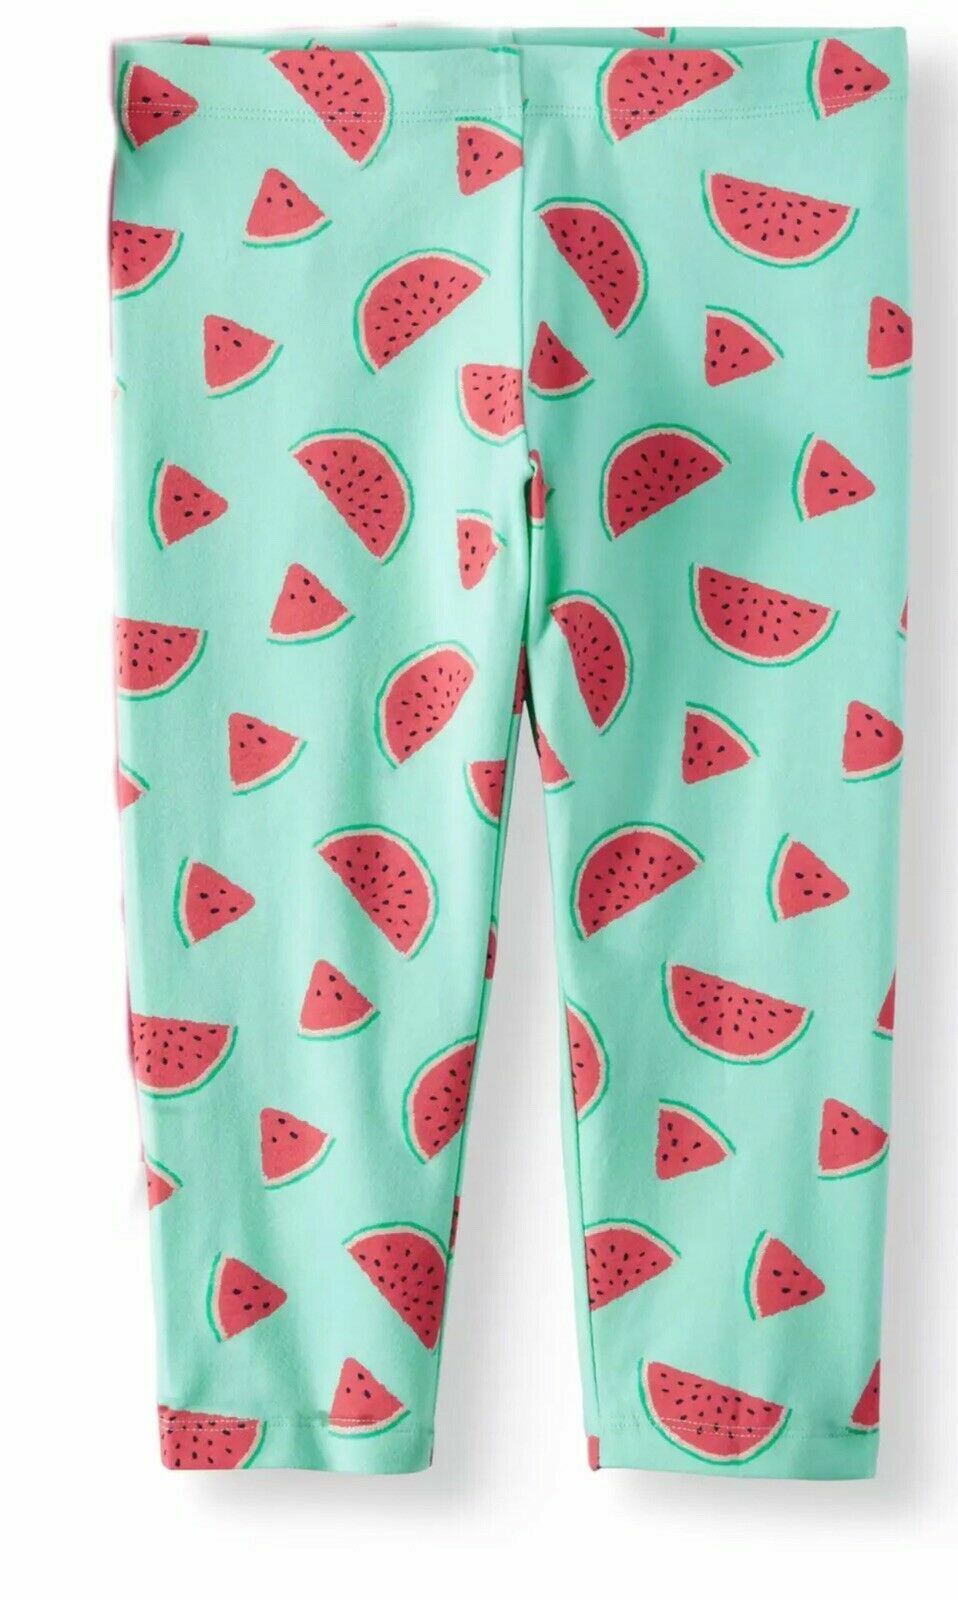 Primary image for Wonder Nation Girls Tough Cotton Capri Leggings Size XX-Large (18) Watermelon